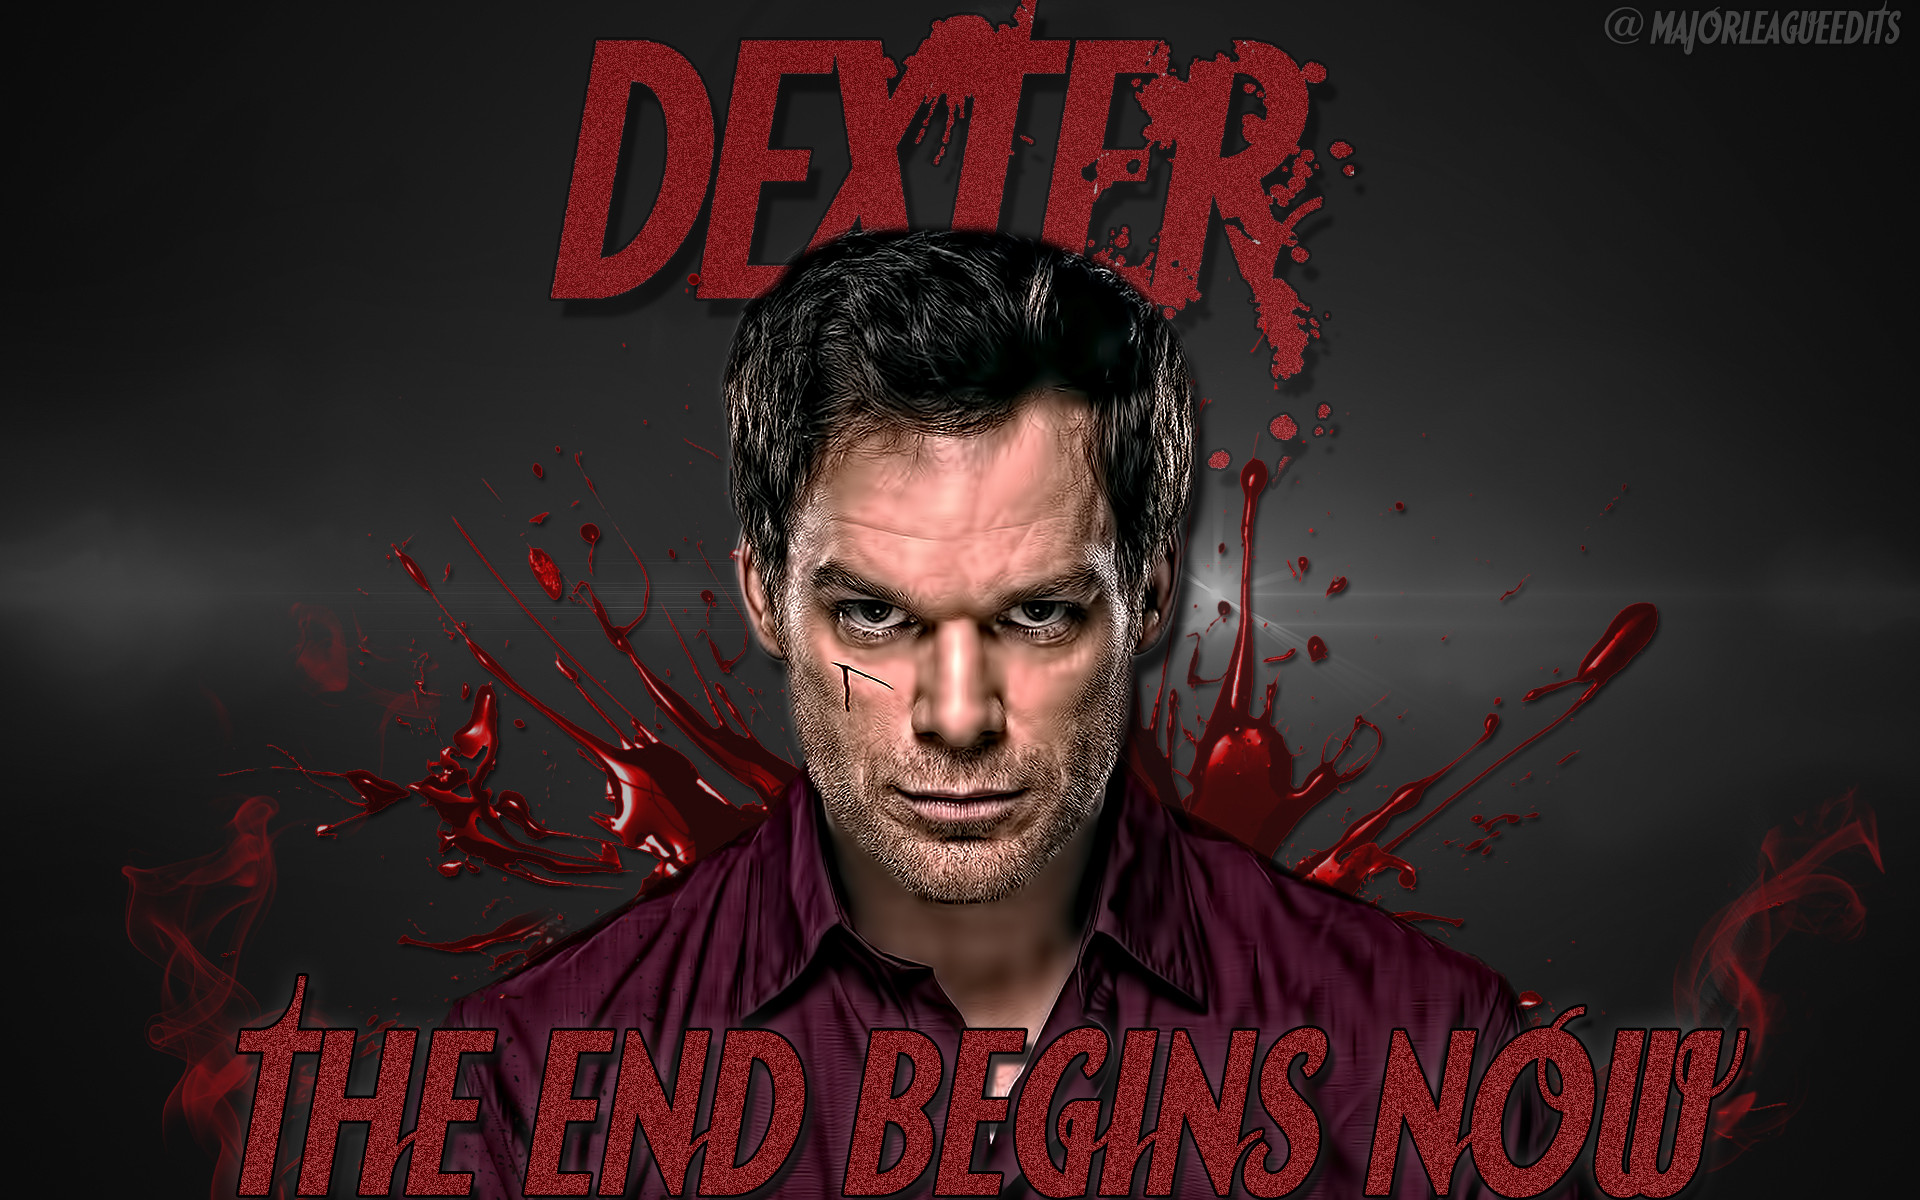 Baixar papel de parede para celular de Dexter, Programa De Tv gratuito.